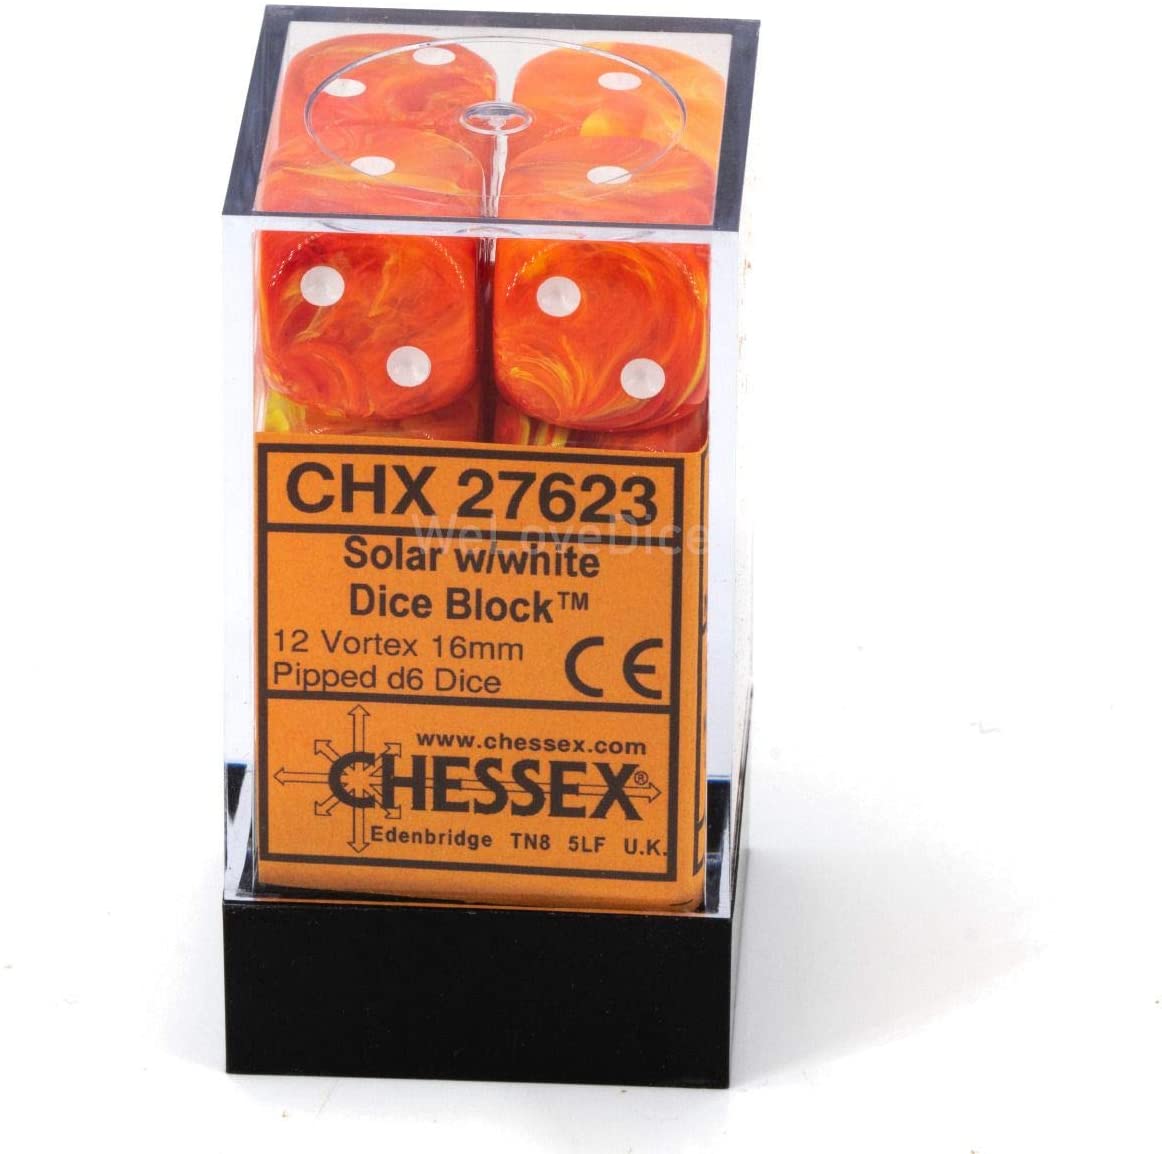 Chessex Dice: D6 Block 16mm - Vortex - Solar with White (CHX 27623) - Gamescape